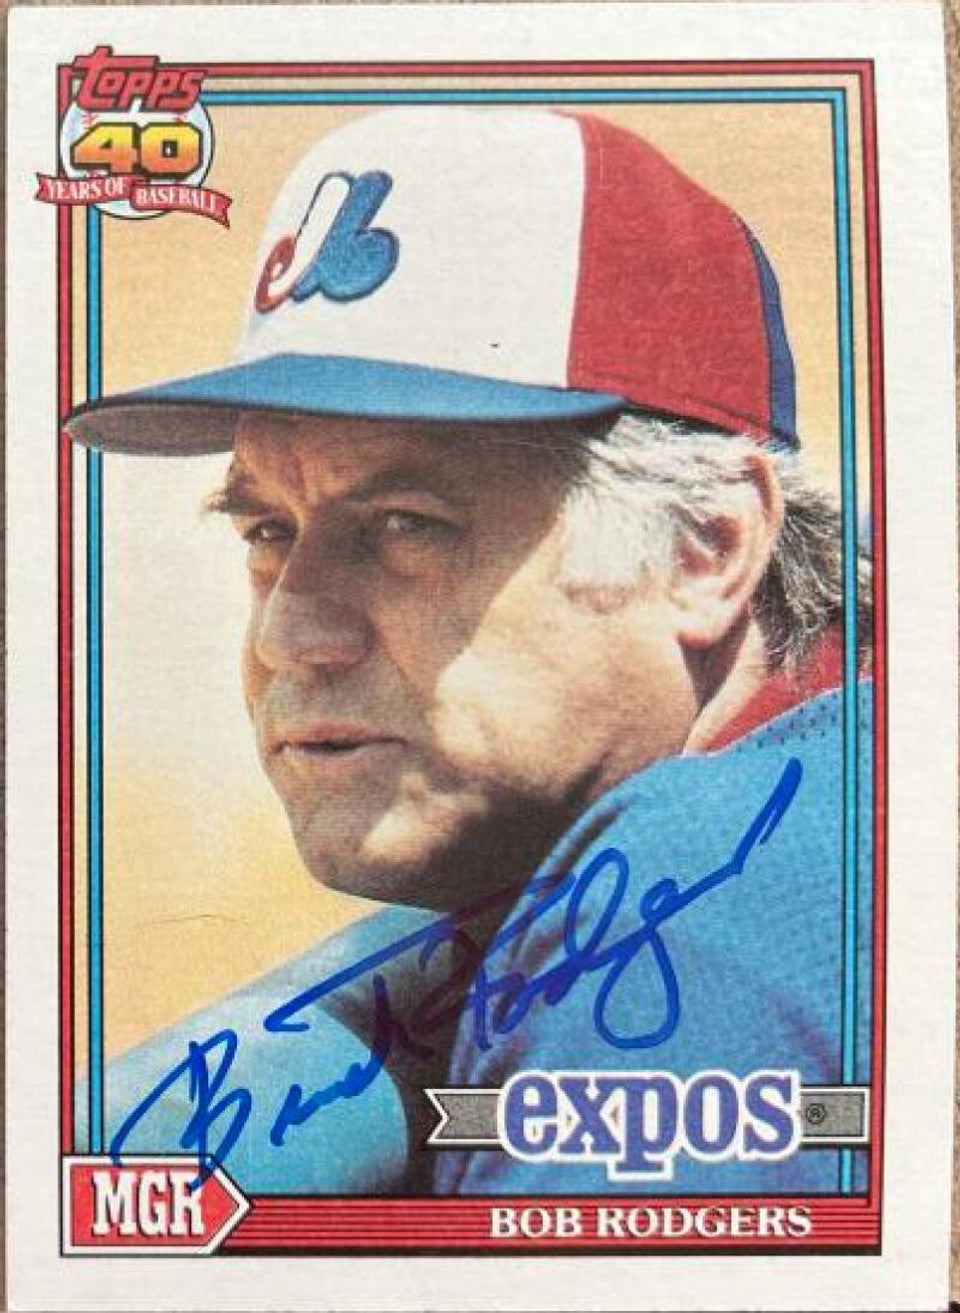 Bob "Buck" Rodgers Signed 1991 Topps Baseball Card - Montreal Expos